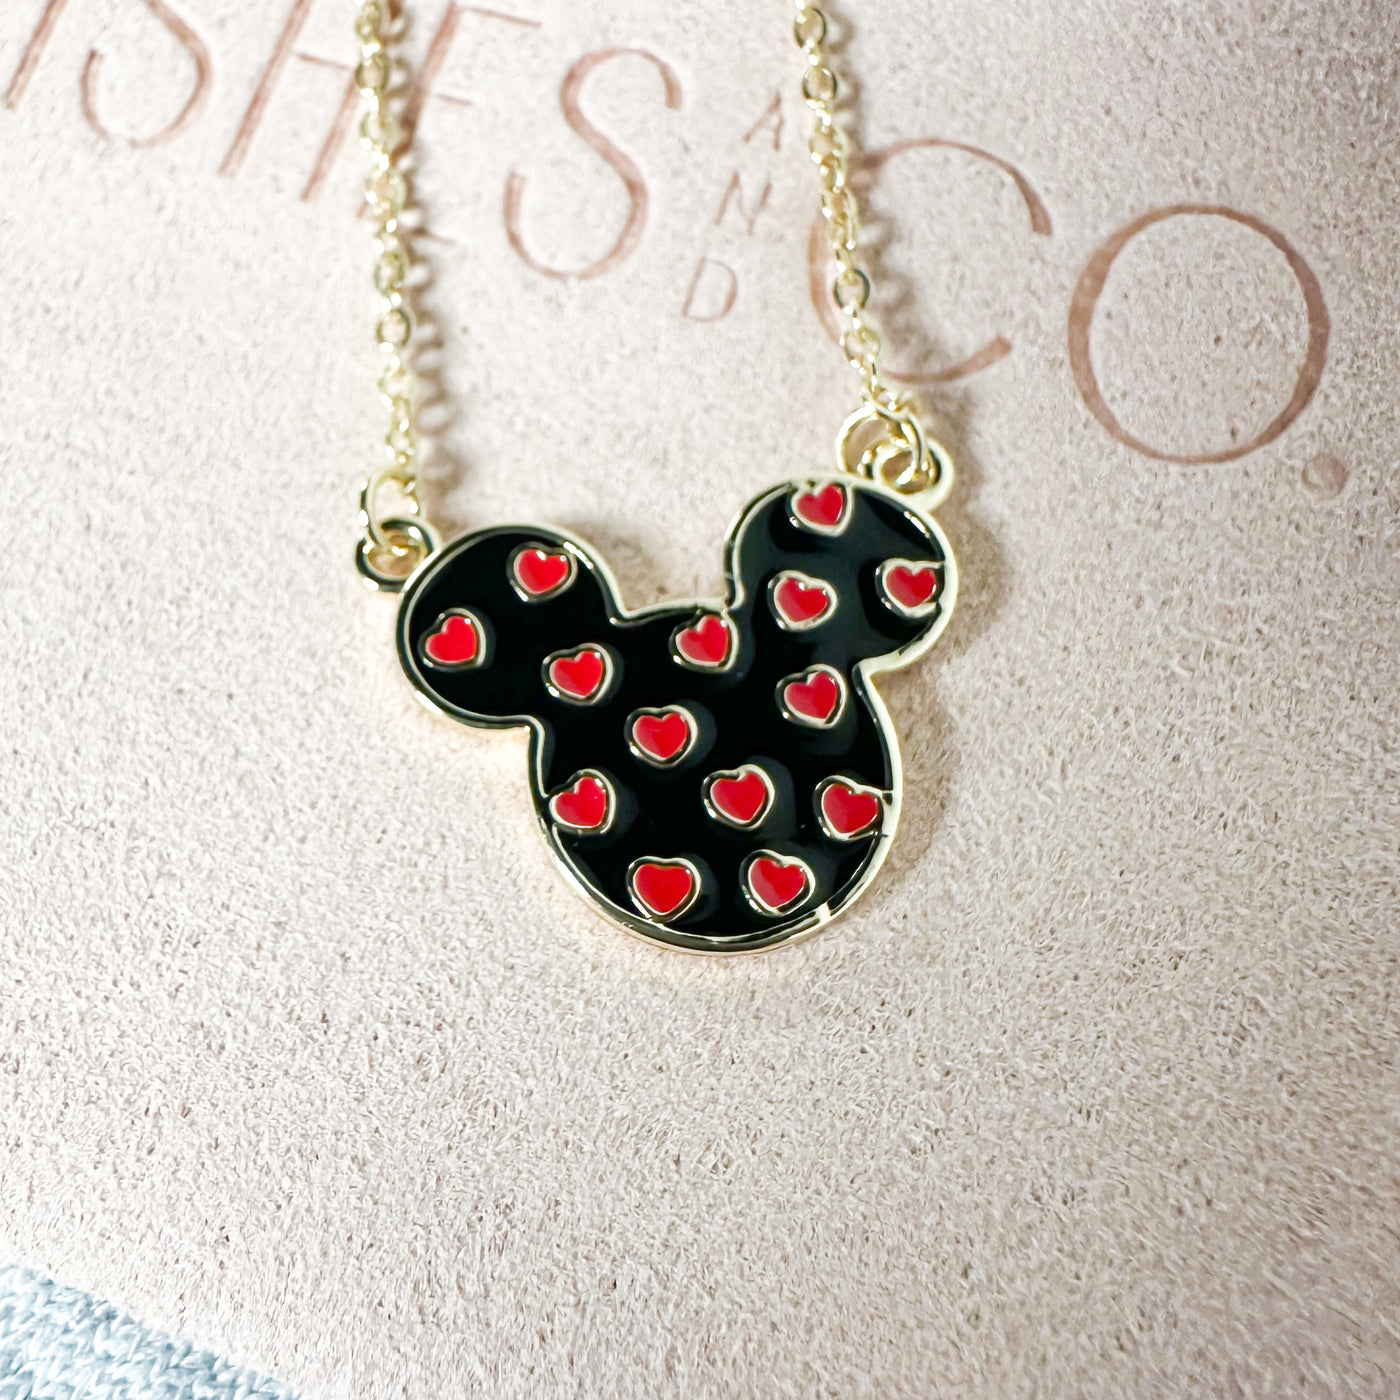 Buy Disney Minnie Mouse Necklace Online | Kogan.com